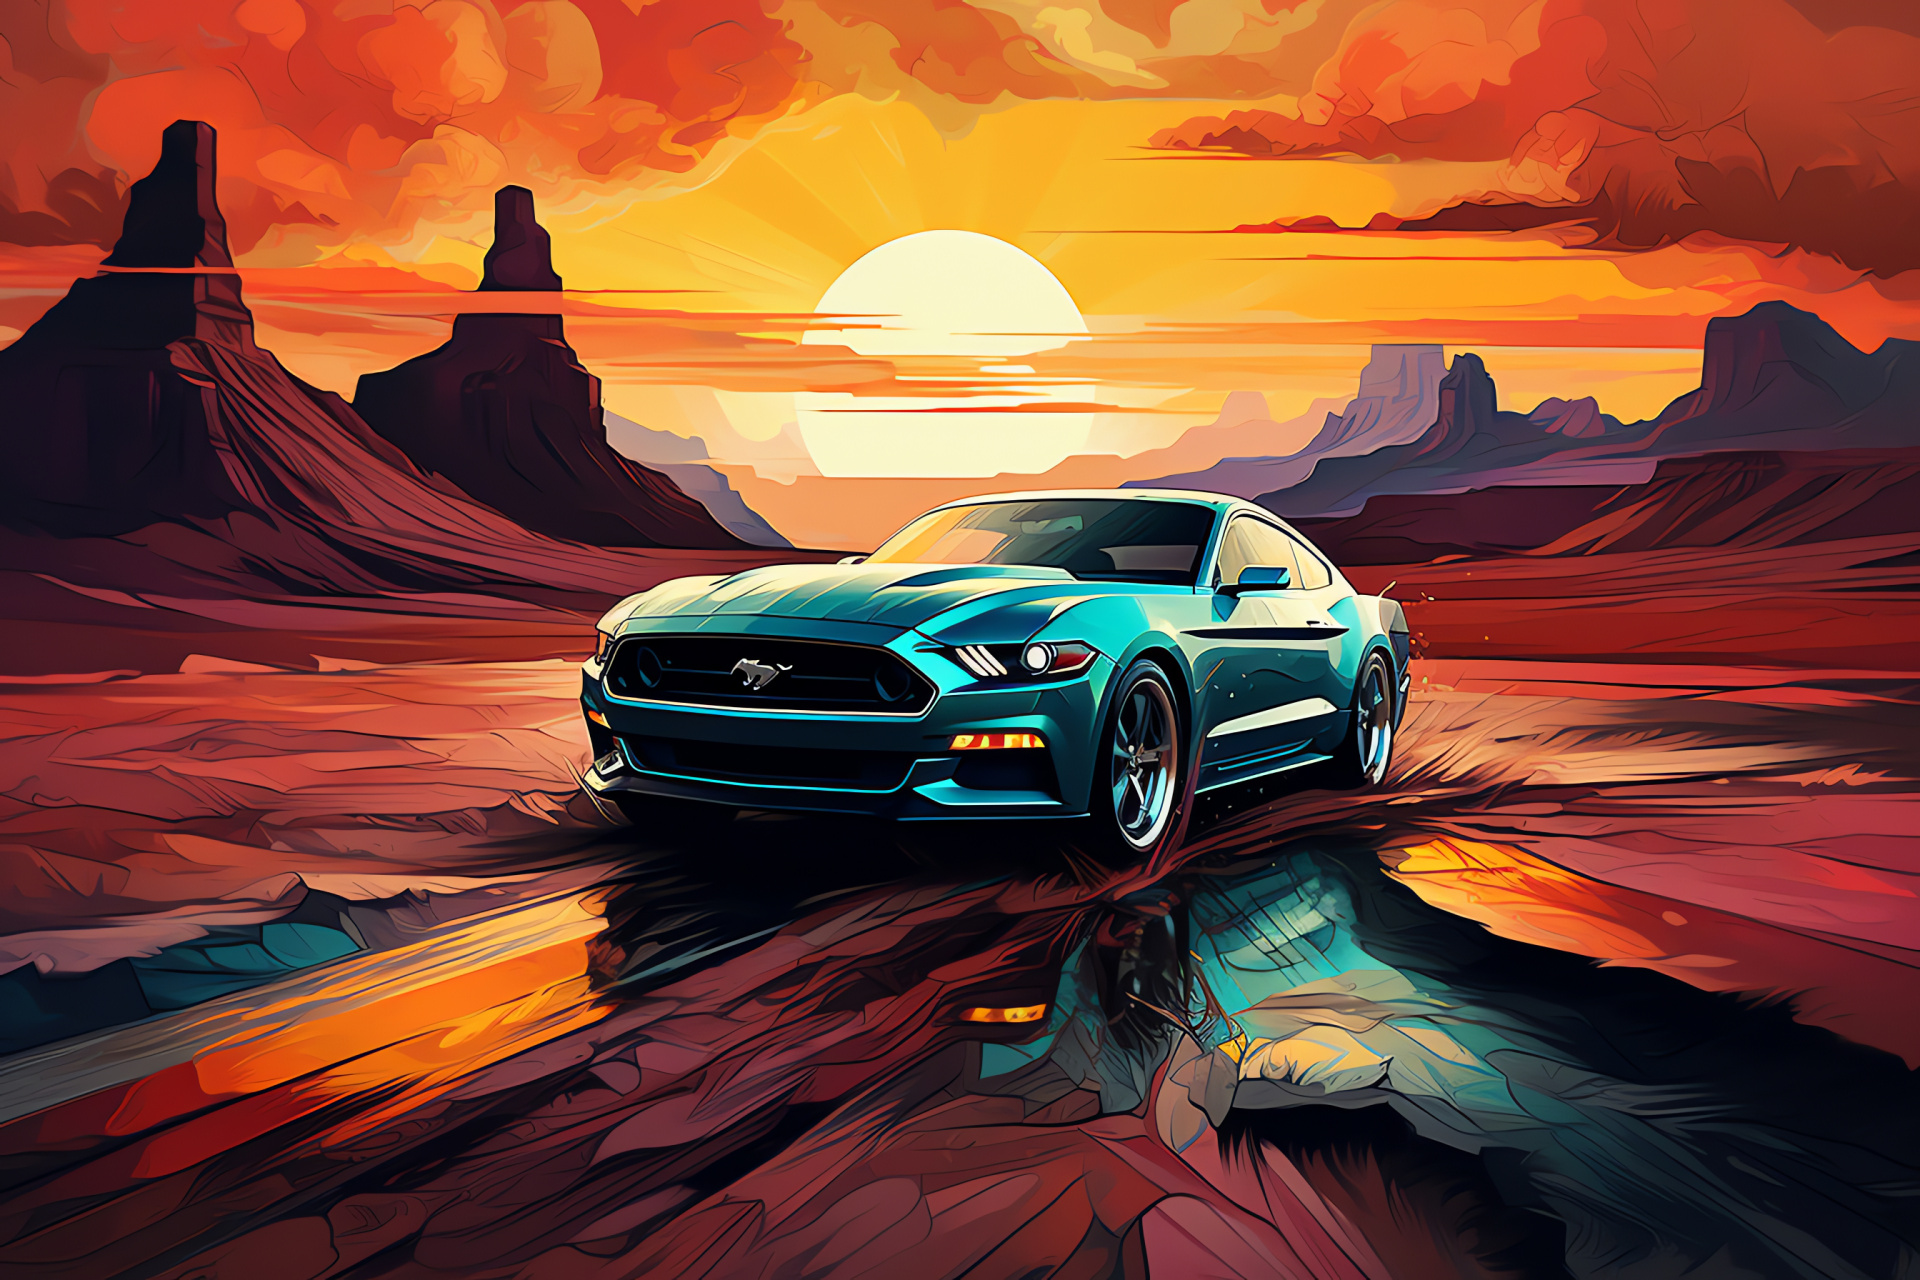 Ford Mustang domination, Landscape expanse, Aerial photography, Artistic interpretation, Automotive impact, HD Desktop Image